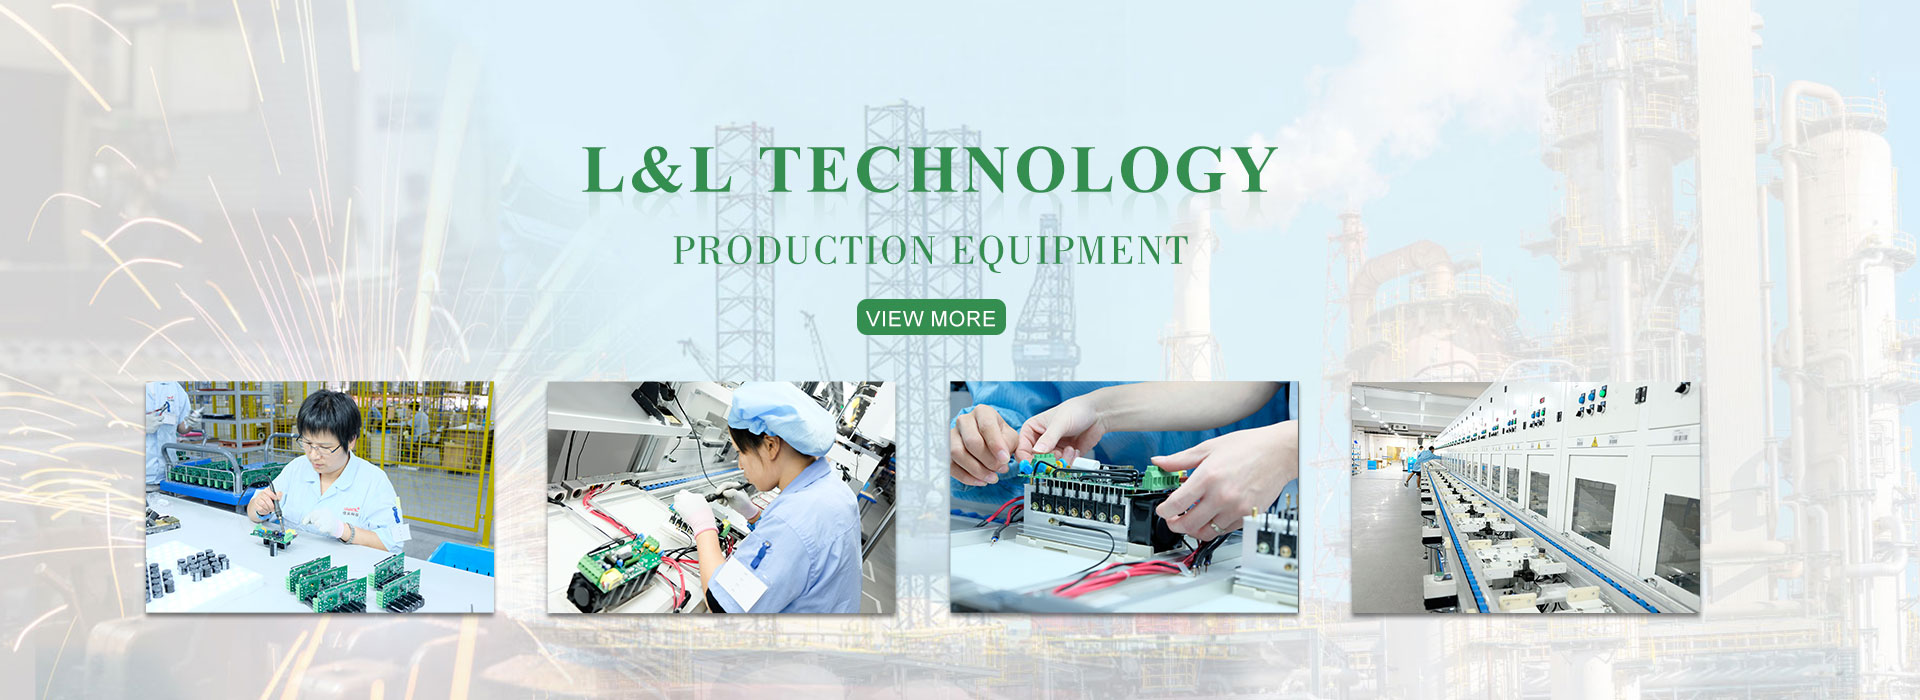 Zhejiang L&L Technology Co.,Ltd. Production Equipment